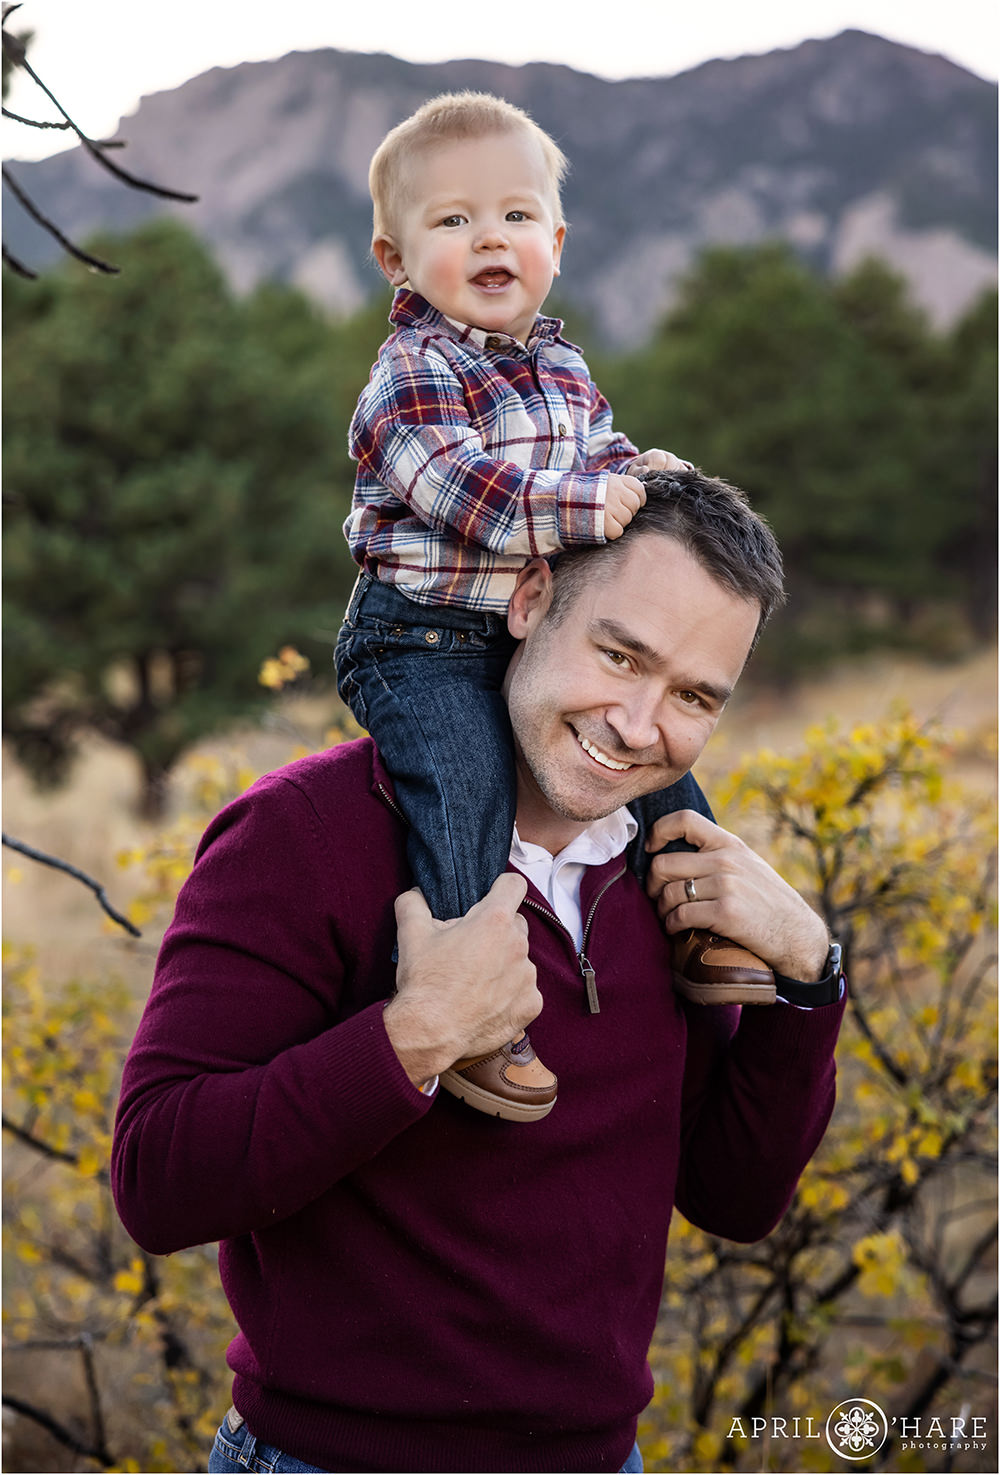 Sweet baby boy rides on his dad's shoulders with a pretty Boulder Colorado backdrop